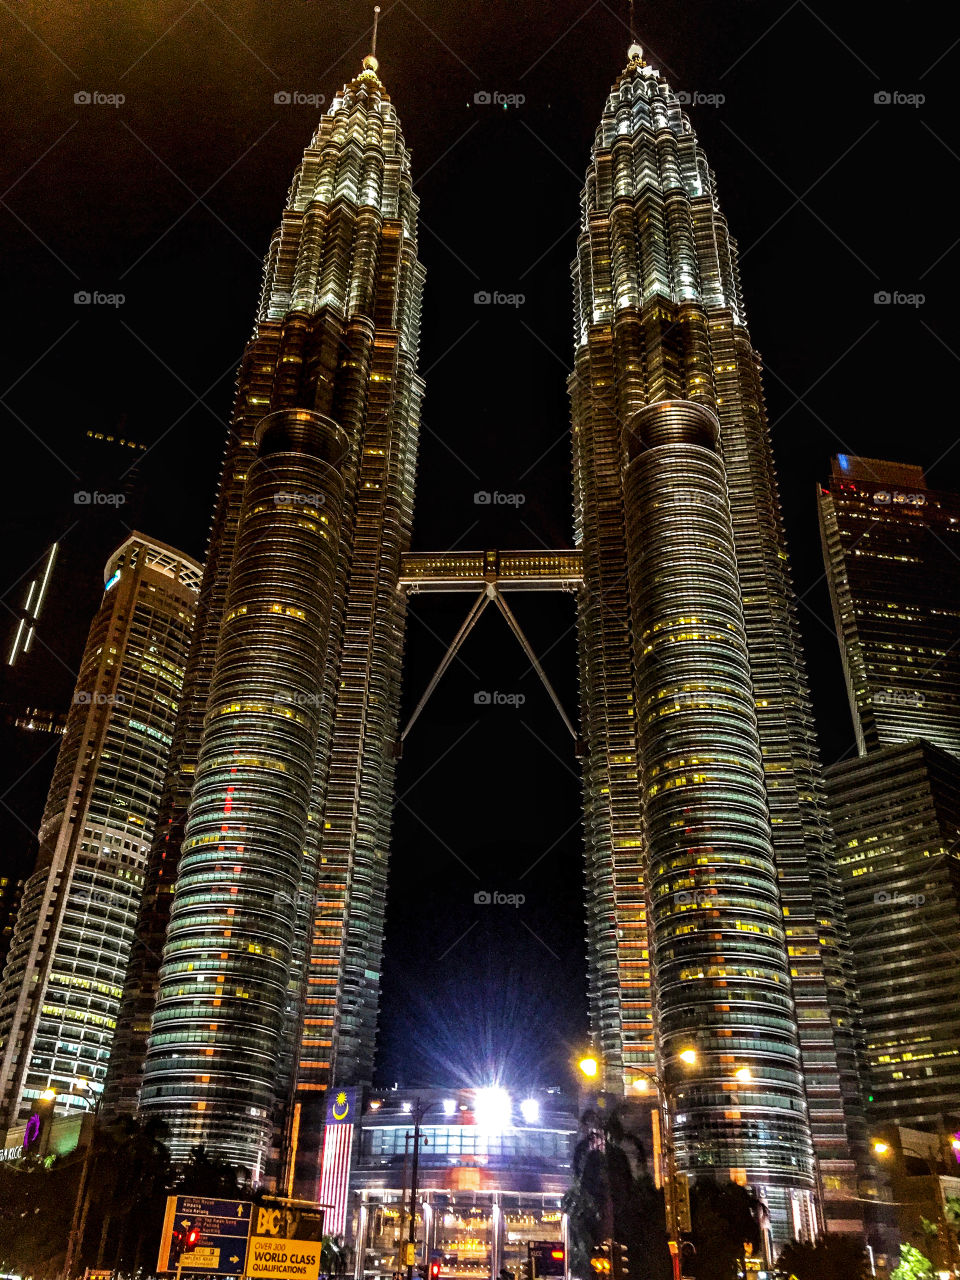 Twin Tower Petronas Kuala Lumpur night shot with Iphone 6 Plus